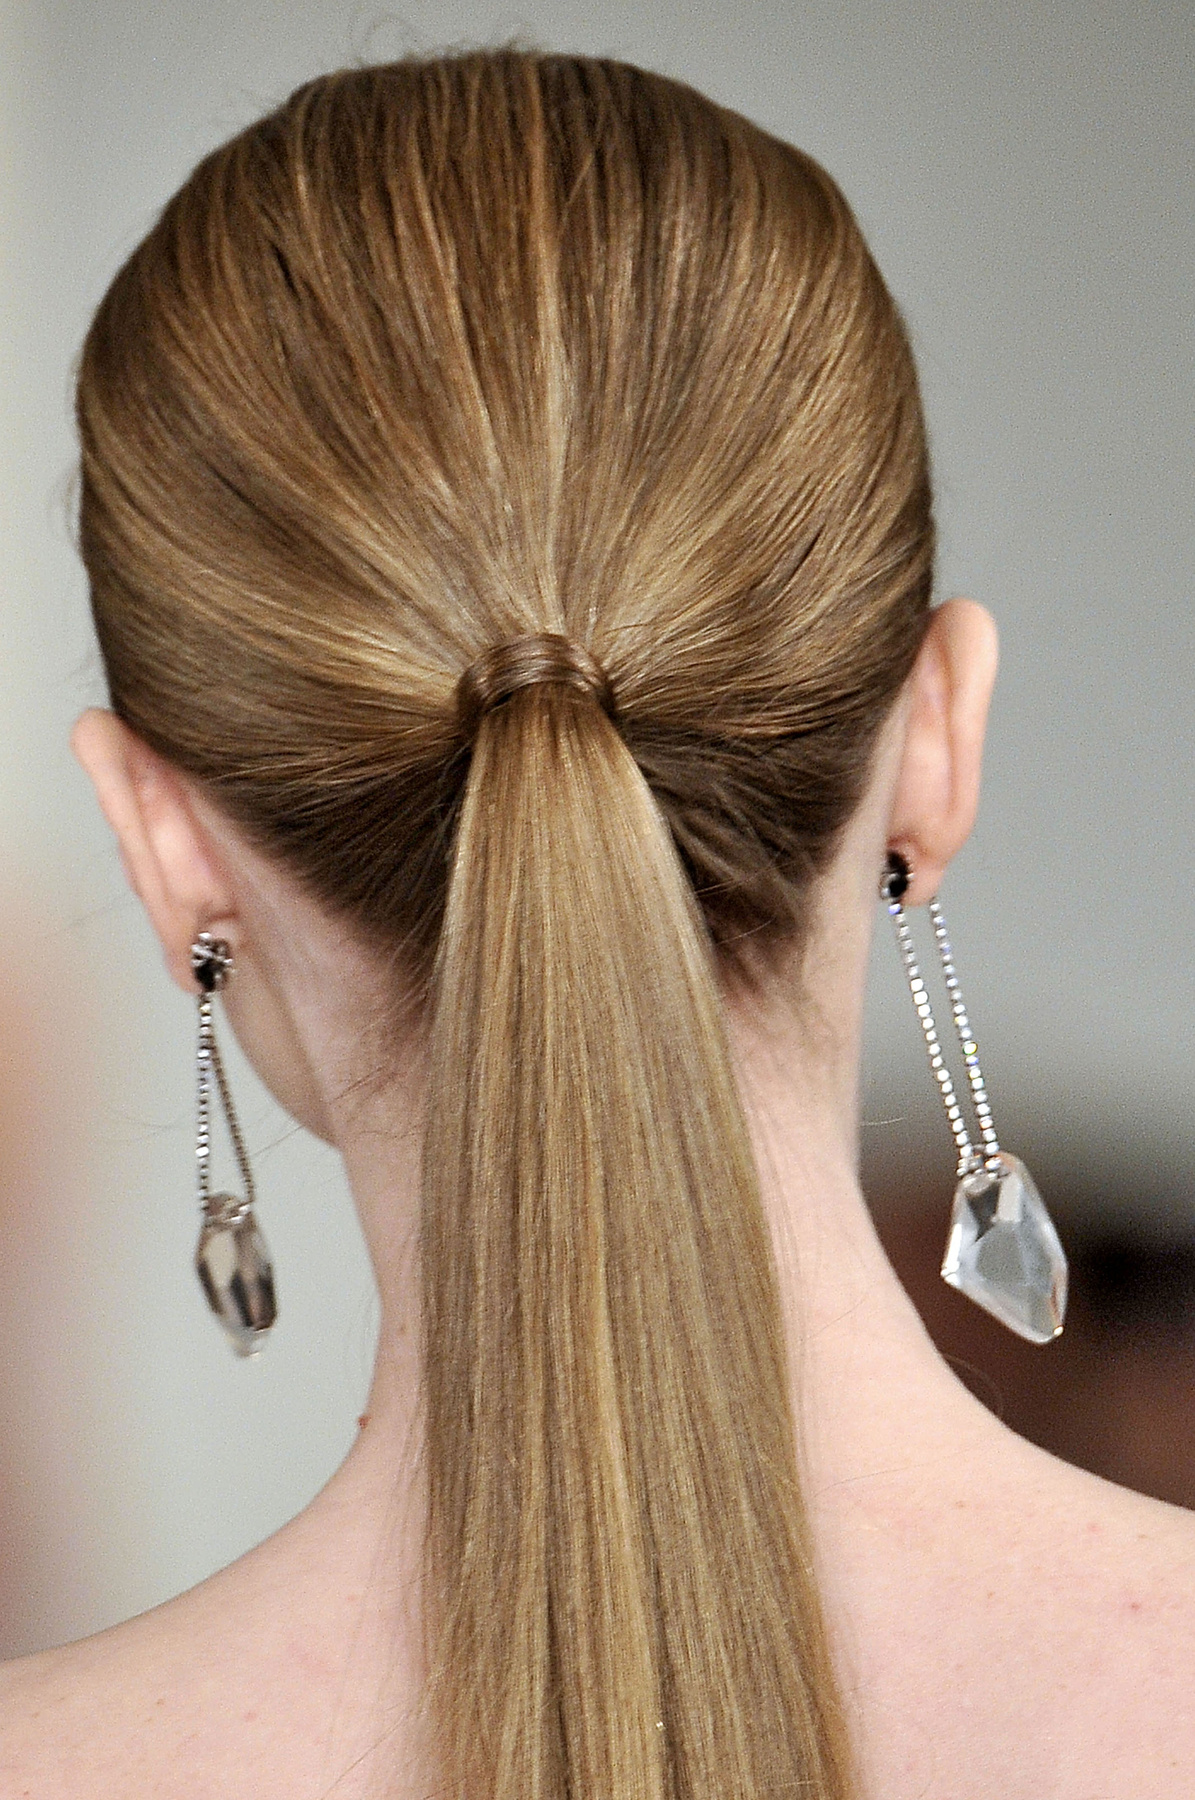 Diane von Furstenberg modelljei is kontyba fésült frizurával mutatták be a kollekciót.